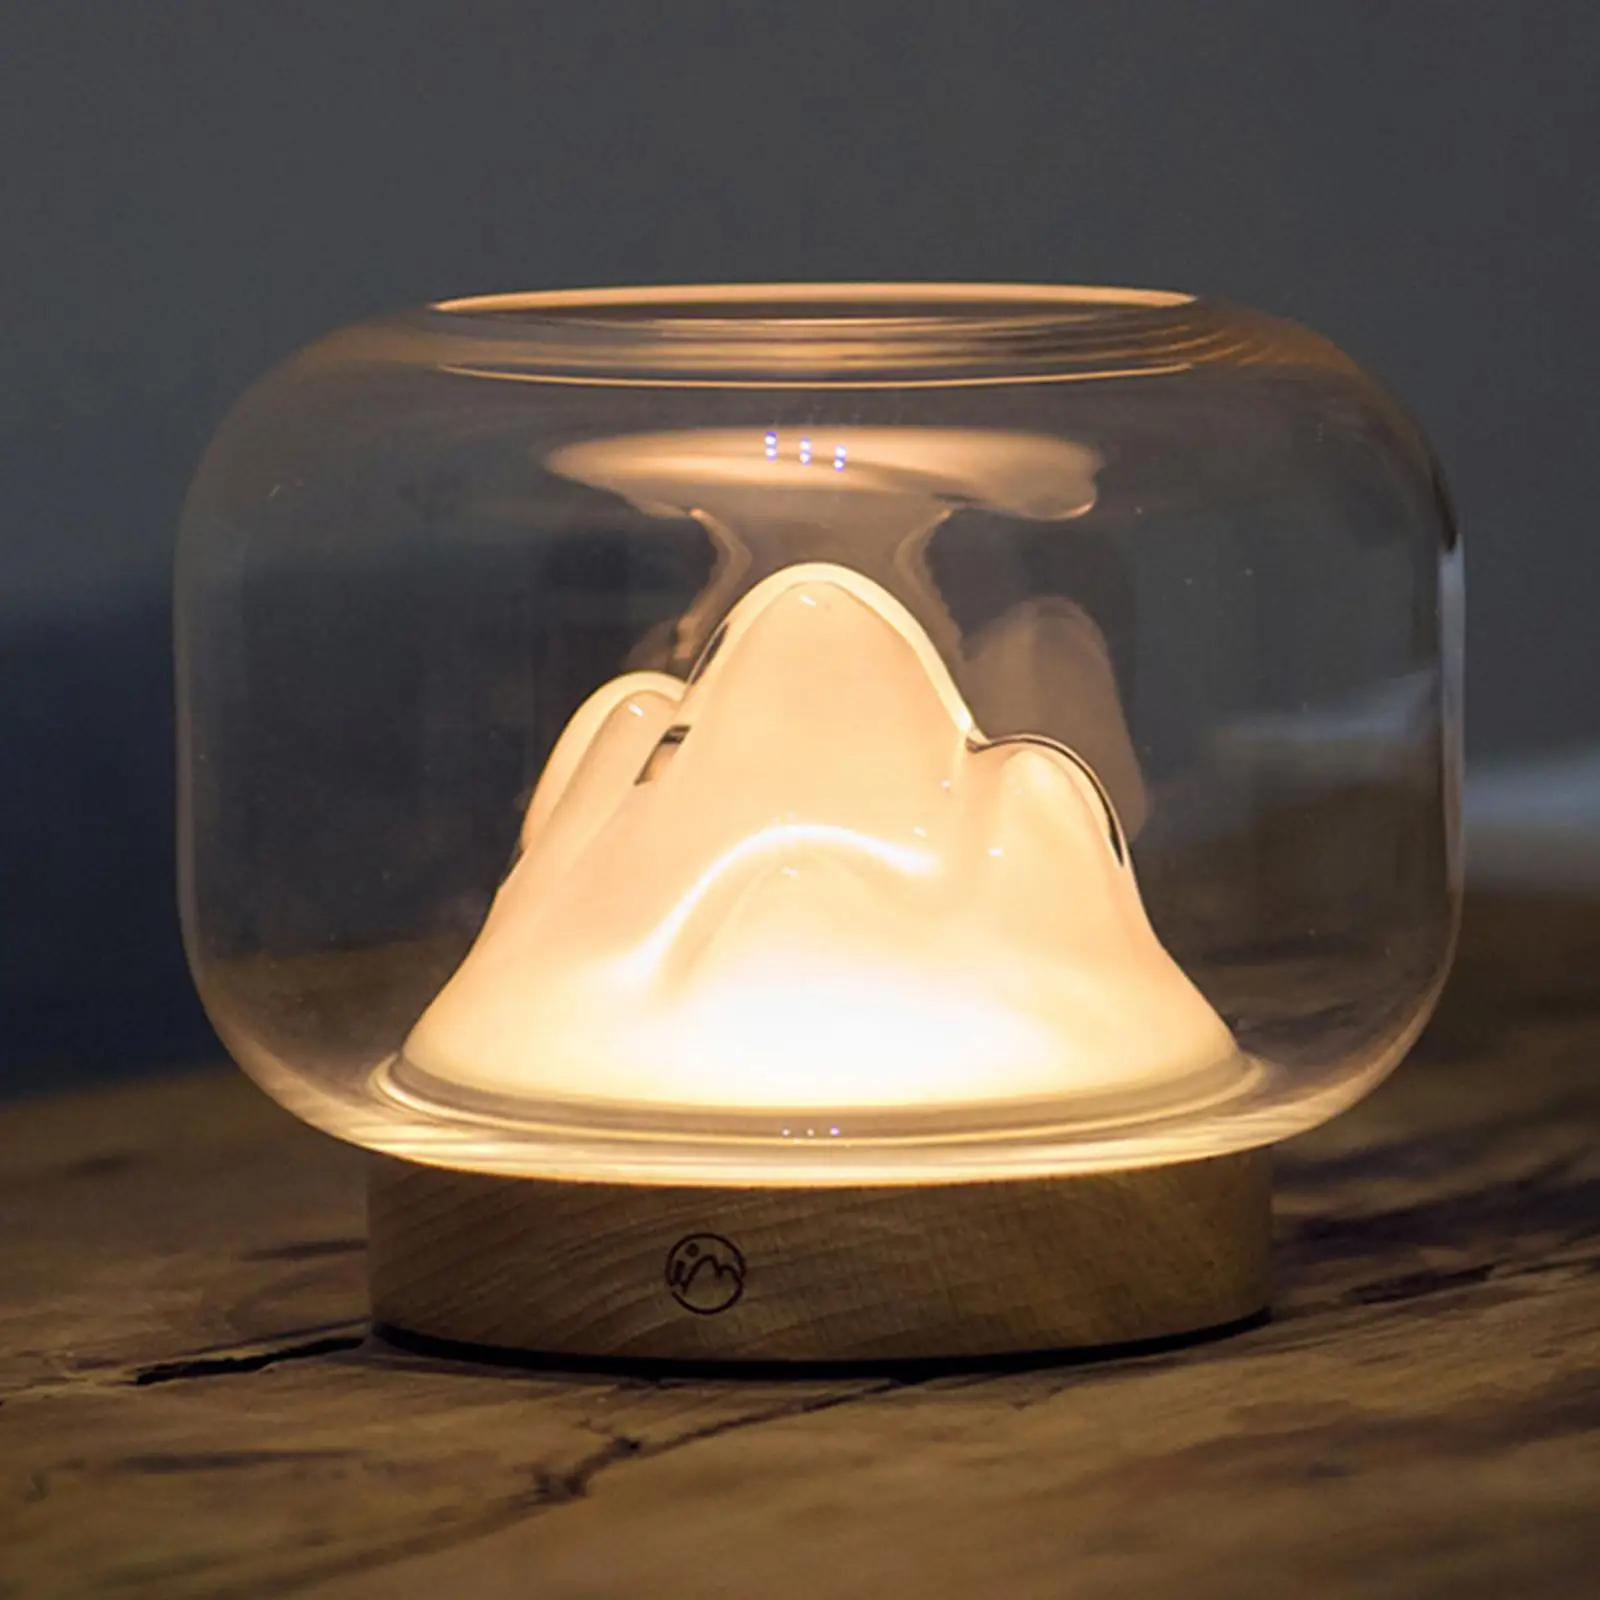 Snow Mountain Lamps for Aquarium Small Terrarium Tank Bedside Lamp Fish Bowl